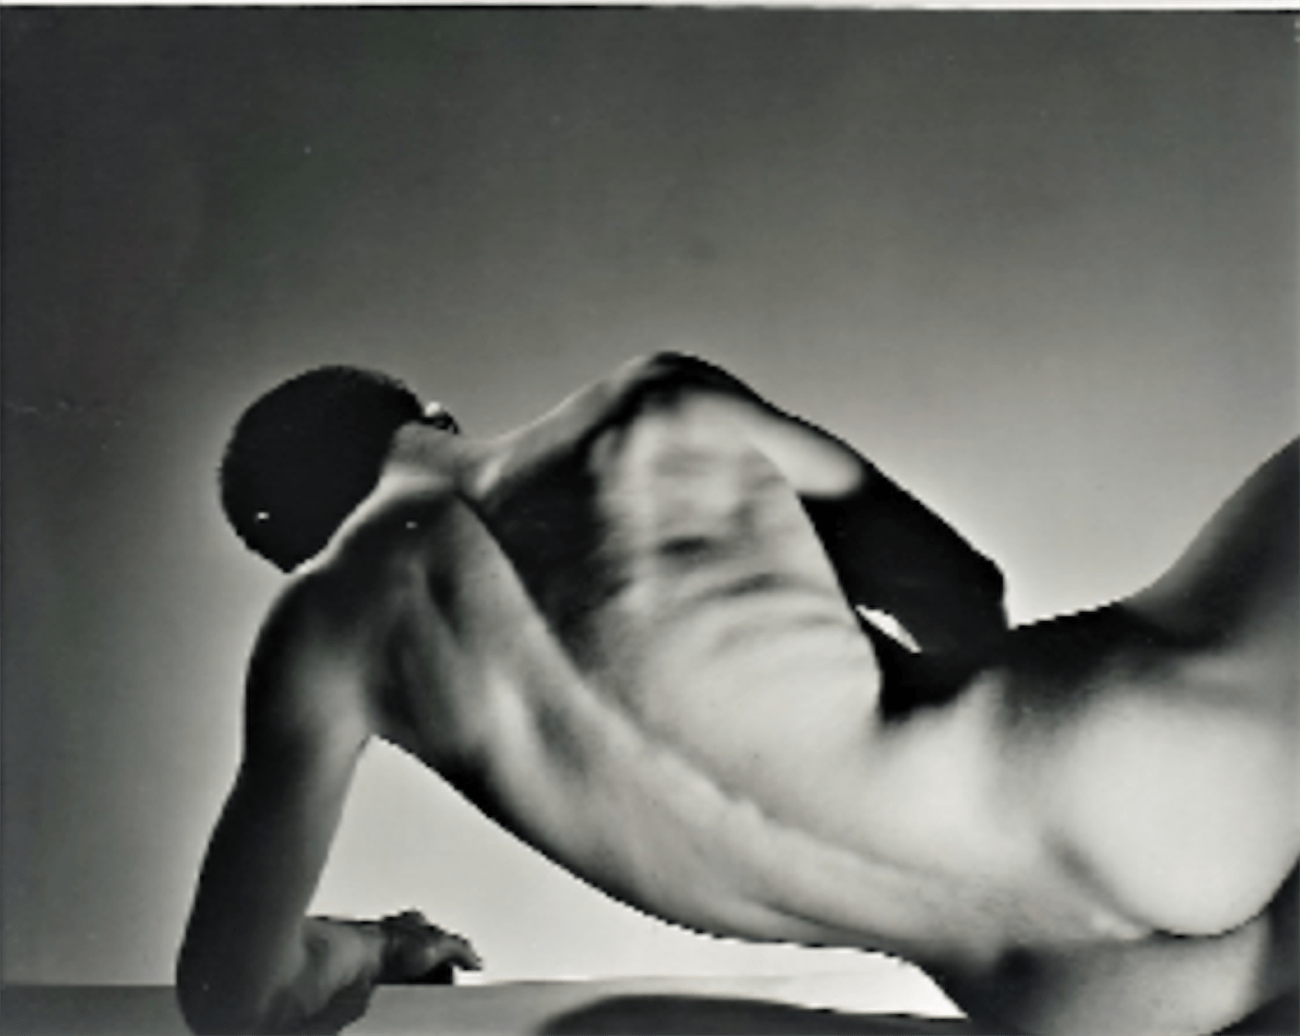 Ted  Starkowski (Back, Lying down)1954 © George Platt
Lynes
